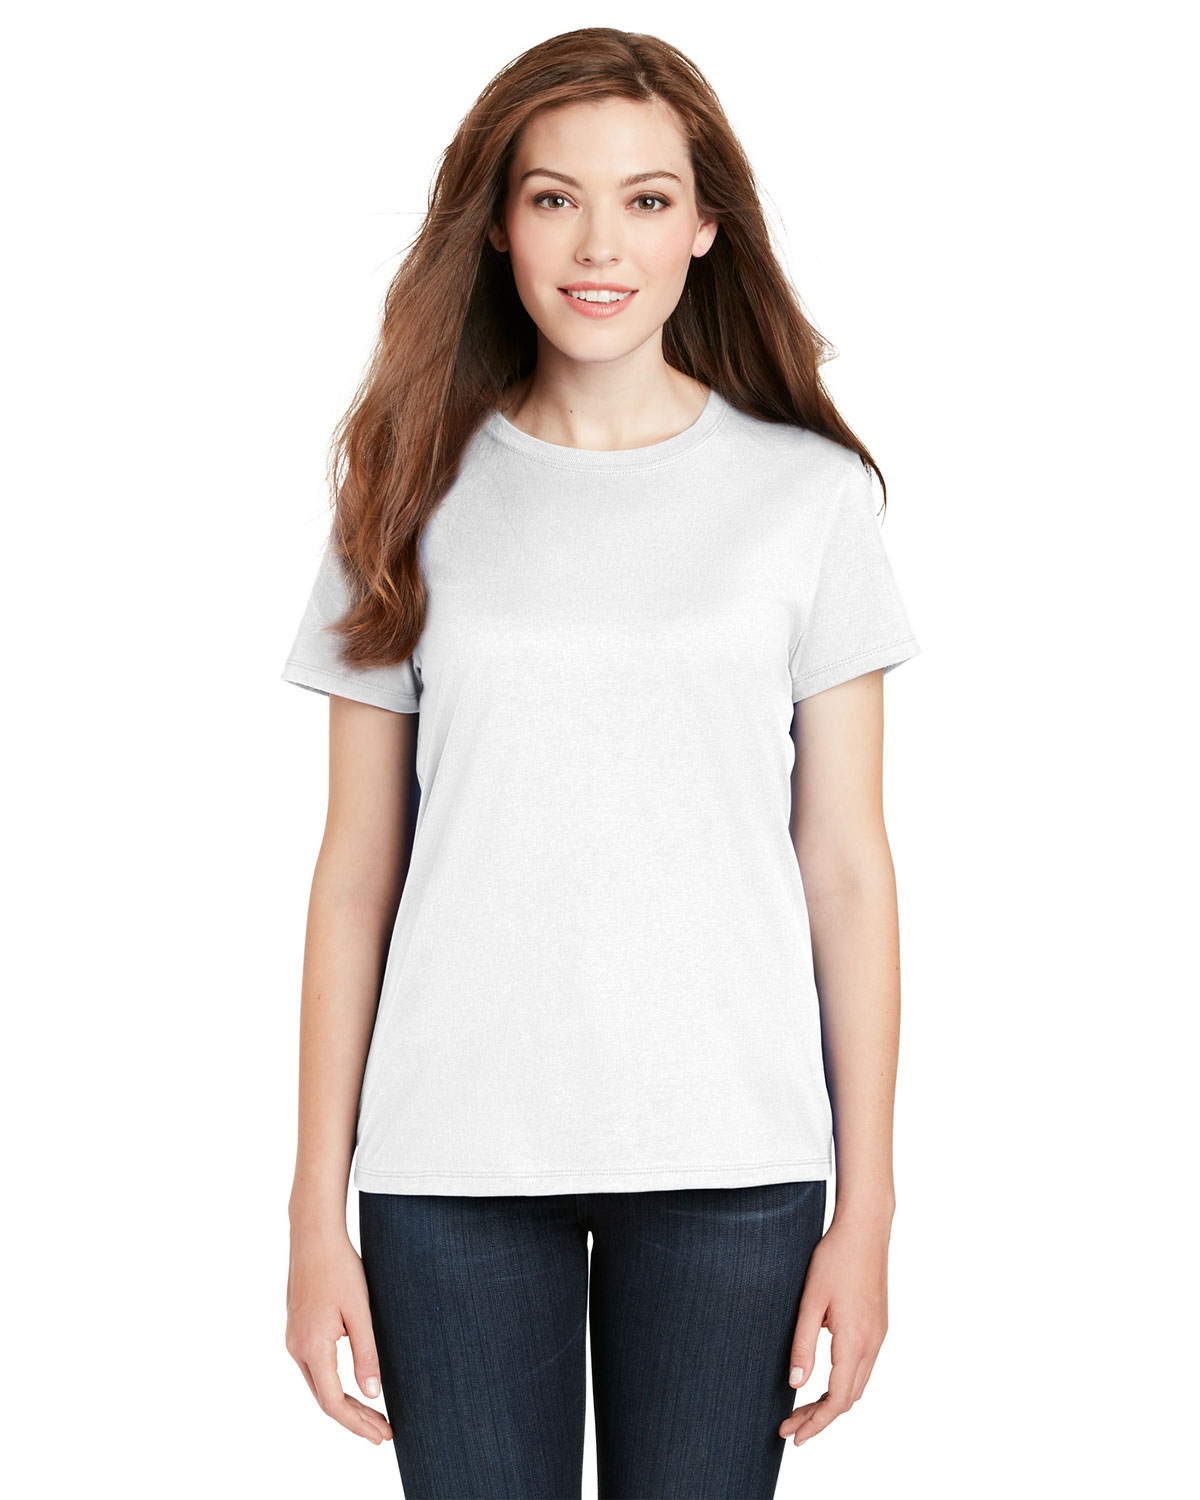 Hanes SL04 Women 4.5 Oz. 100% Ringspun Cotton Nanot T-Shirt at Apparelstation